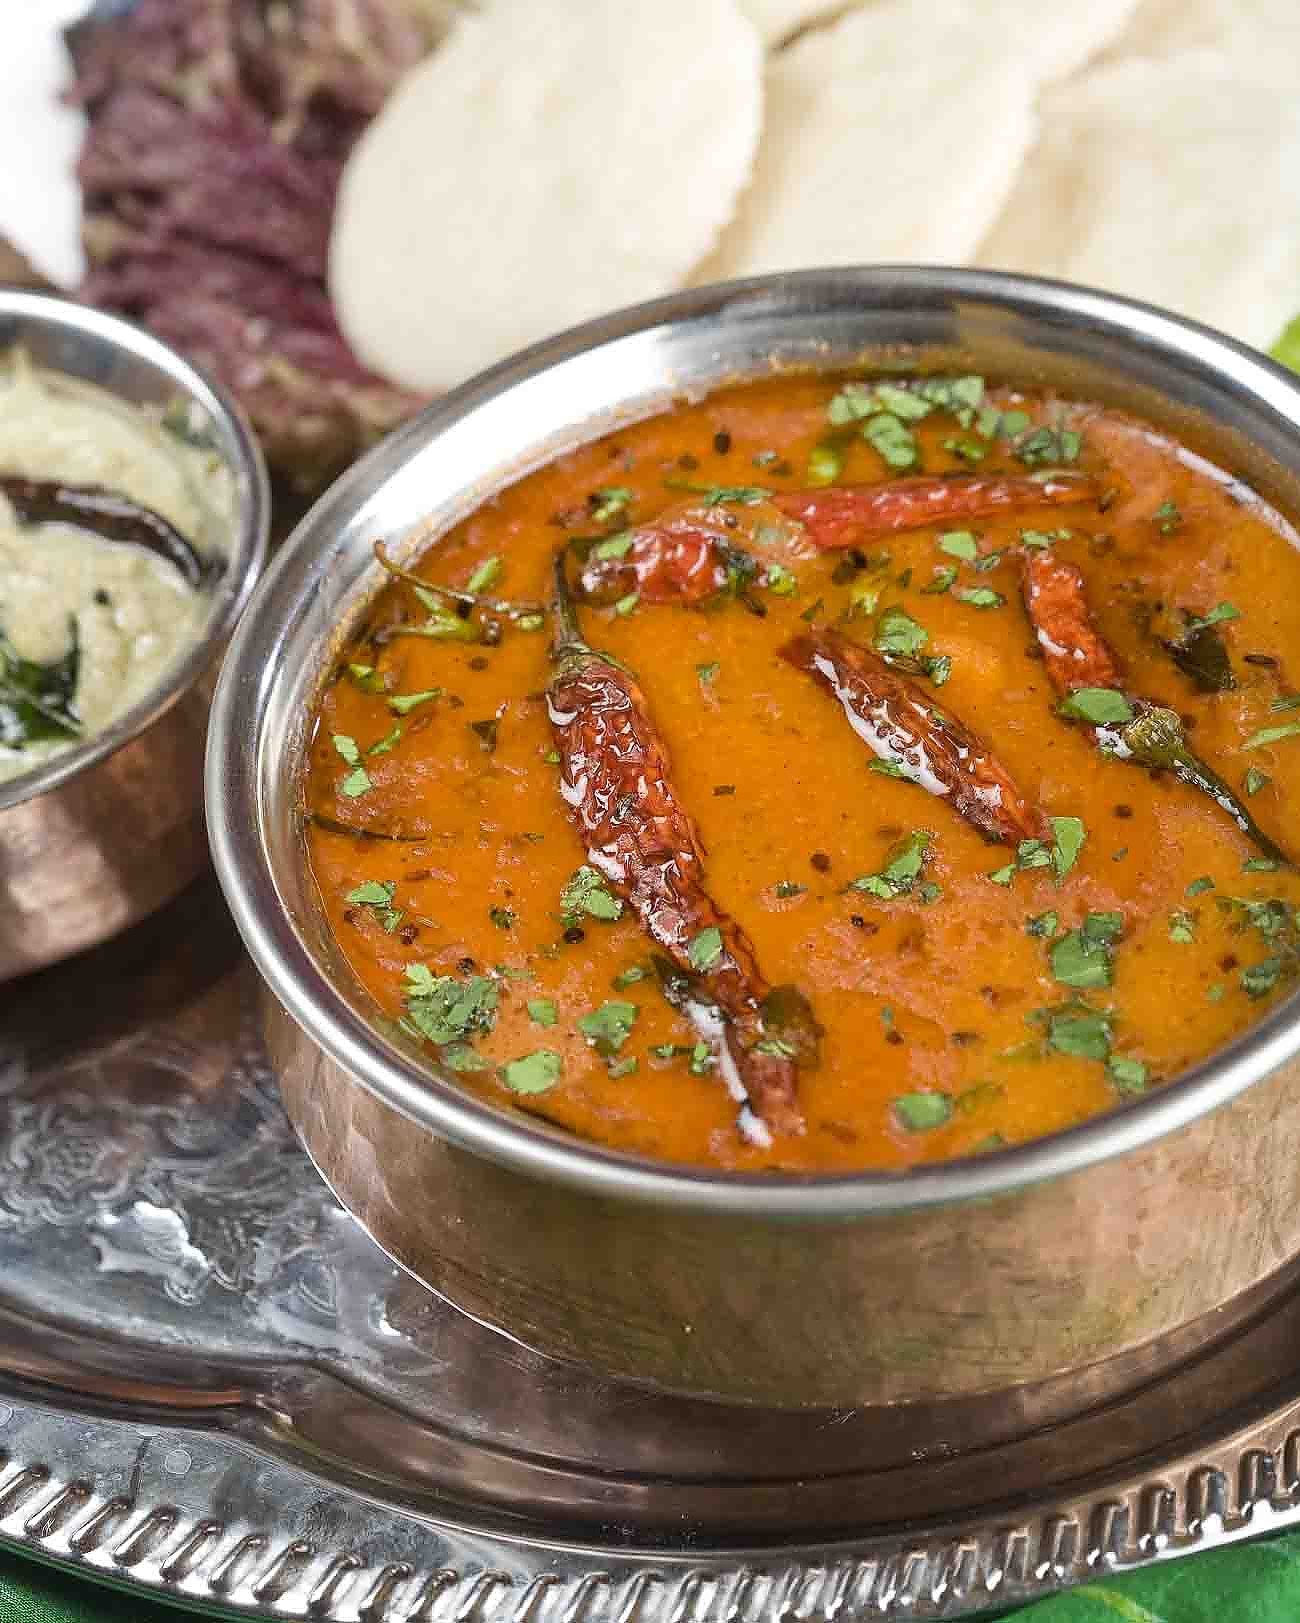 केरला स्टाइल उल्ली थियल रेसिपी - Kerala Style Ulli Theeyal Recipe